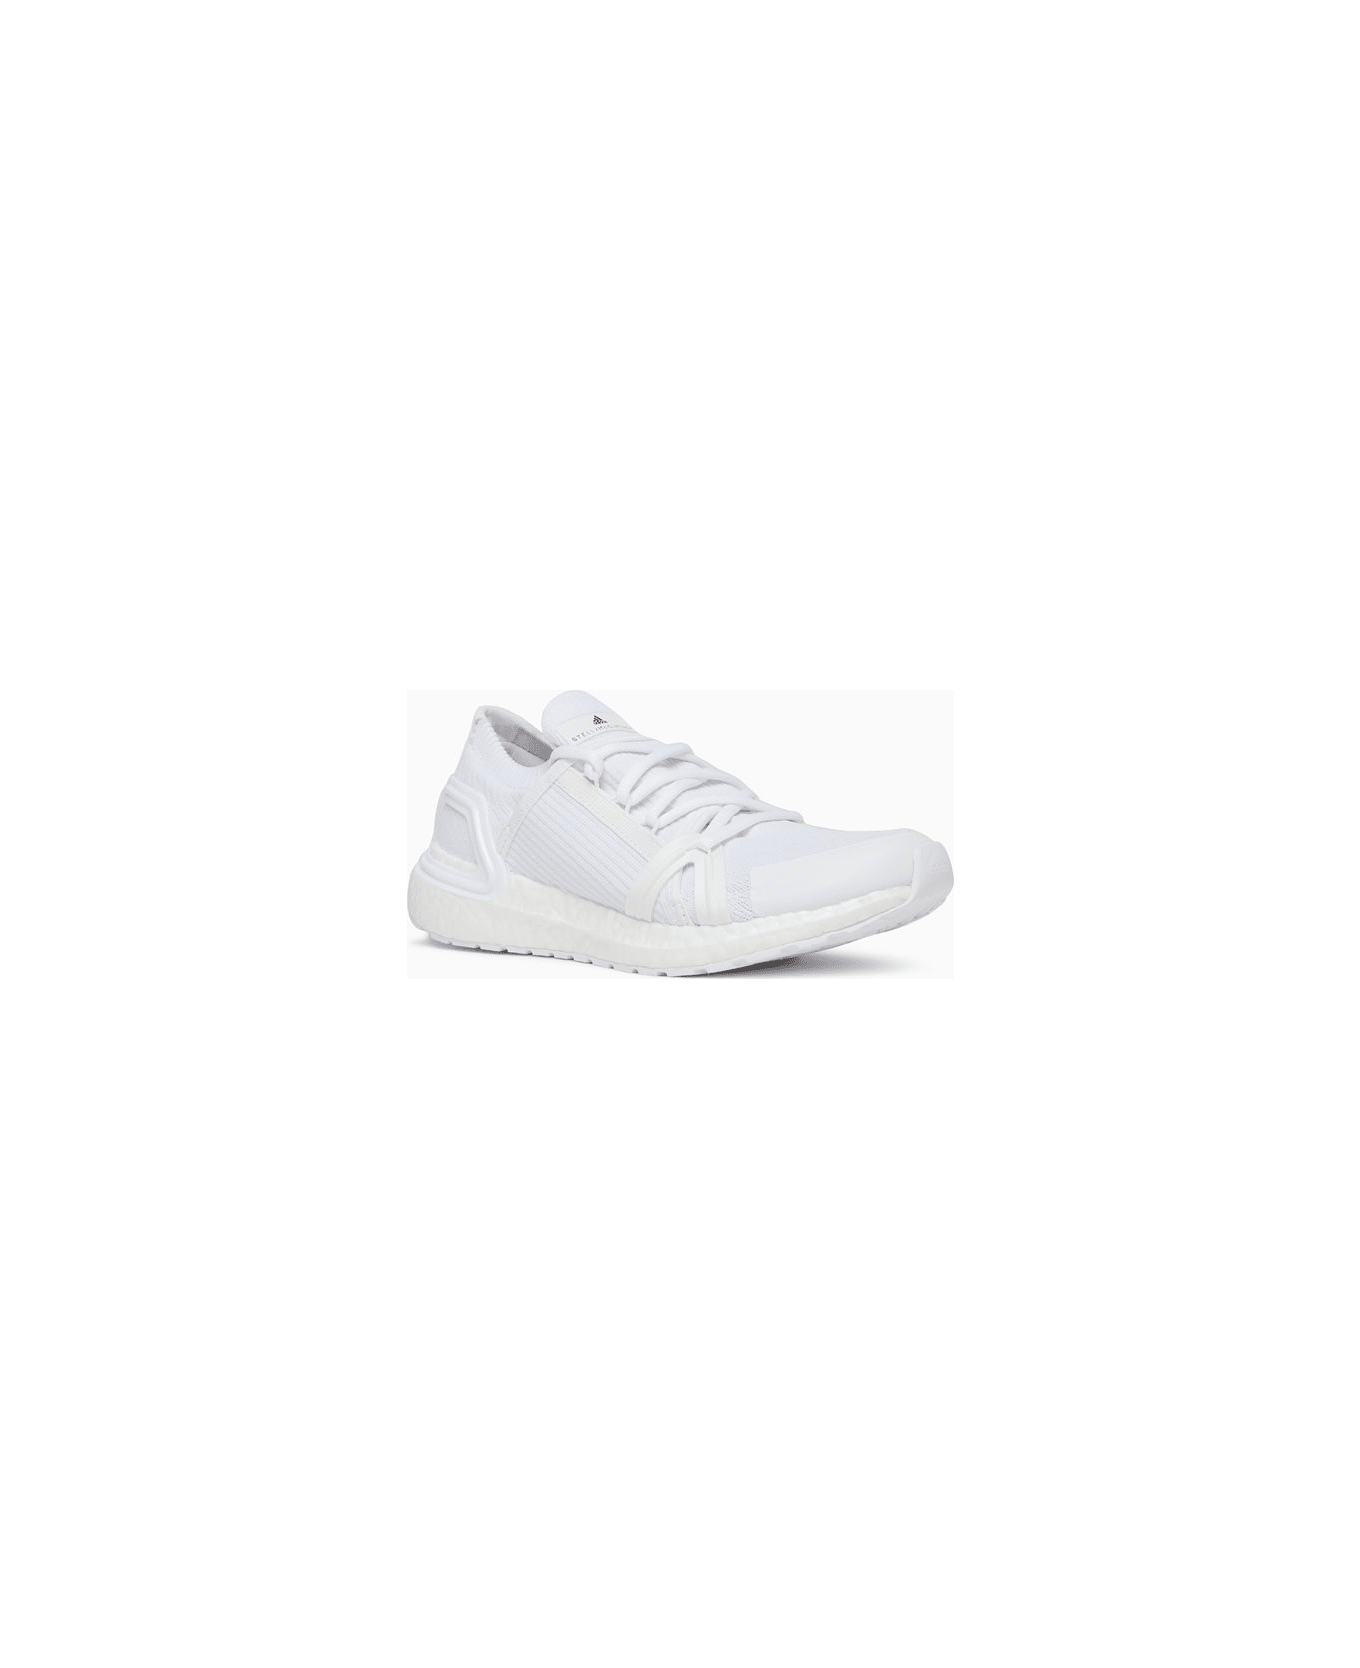 Adidas by Stella McCartney Asmc Ultraboost 20 Sneakers Hp6701 - White スニーカー